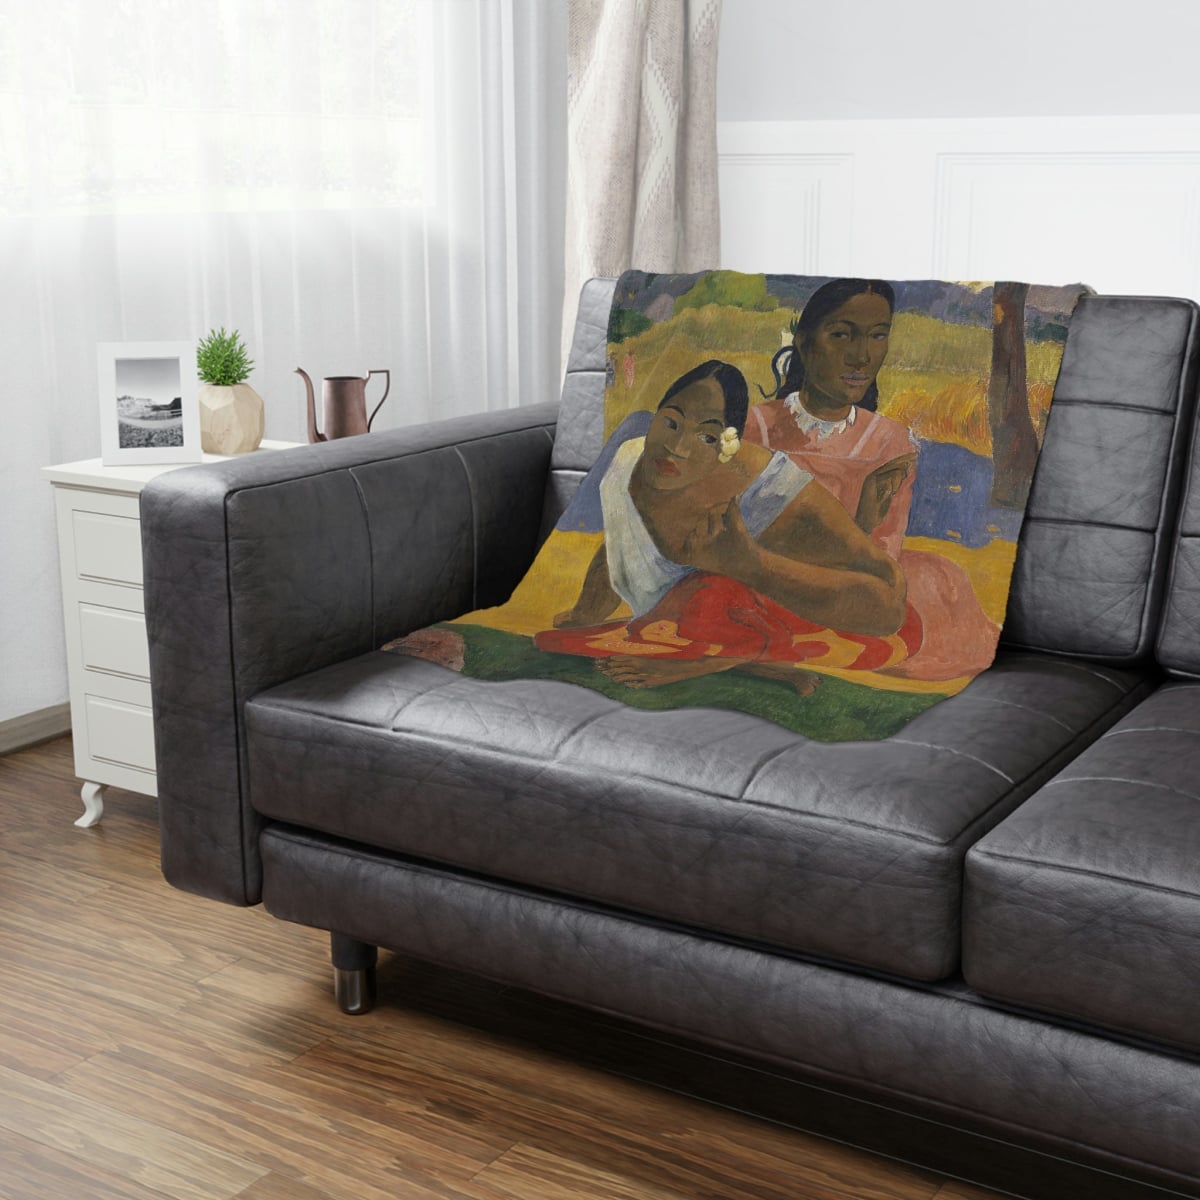 Nafea Faa Ipoipo Blanket - Paul Gauguin Inspired Decor